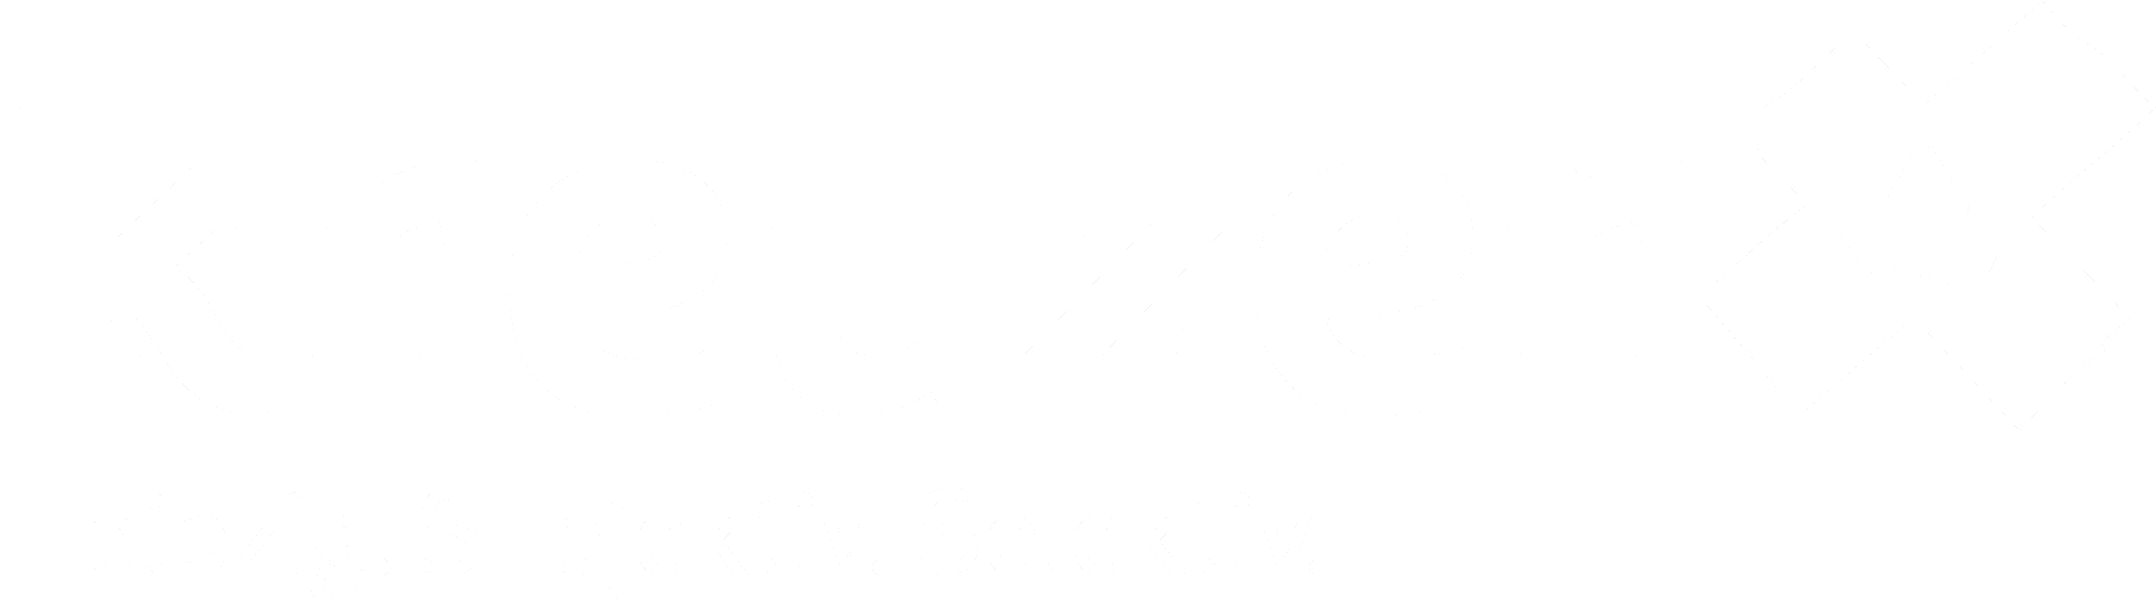 Kreuzer Logo